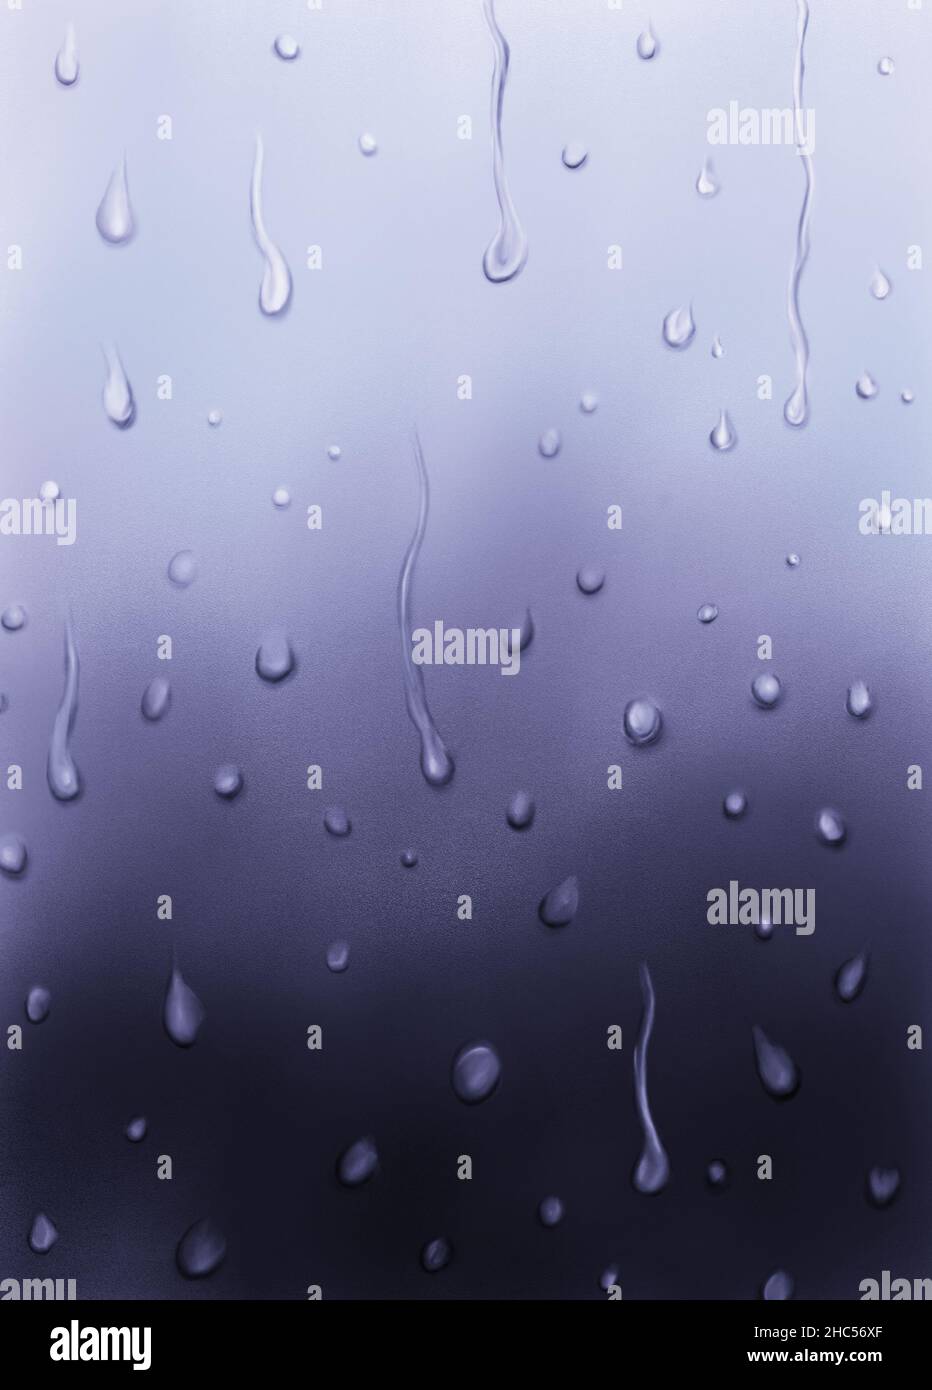 Rain drops on glass window hand draw illustration Stock Photo